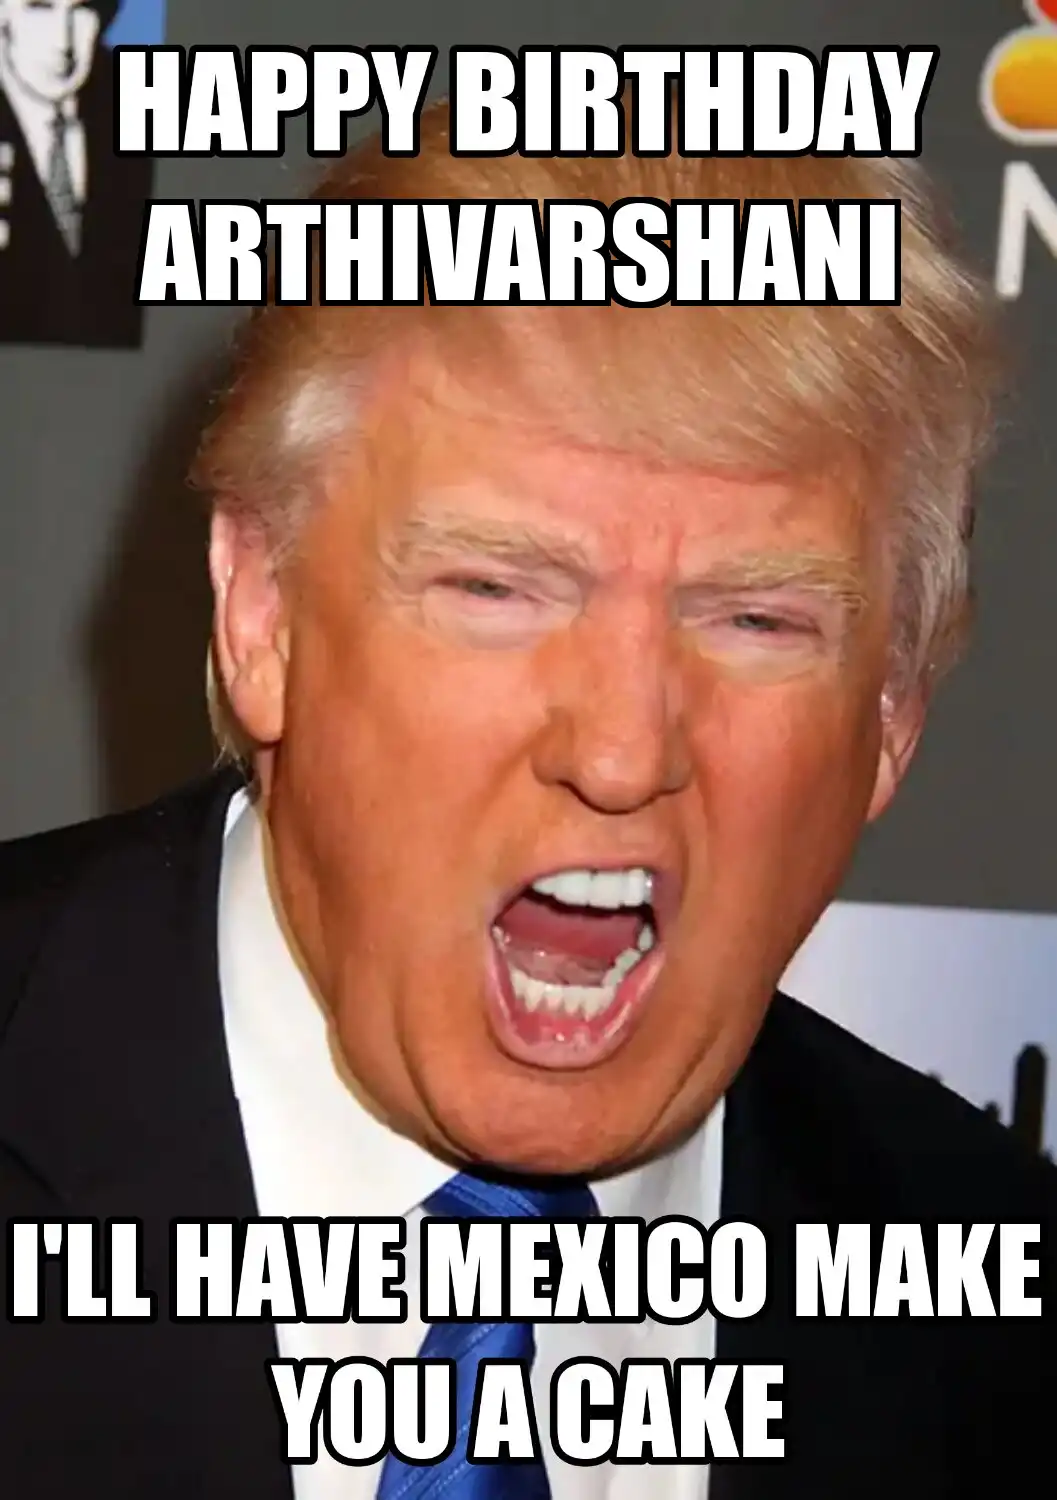 Happy Birthday Arthivarshani Mexico Make You A Cake Meme